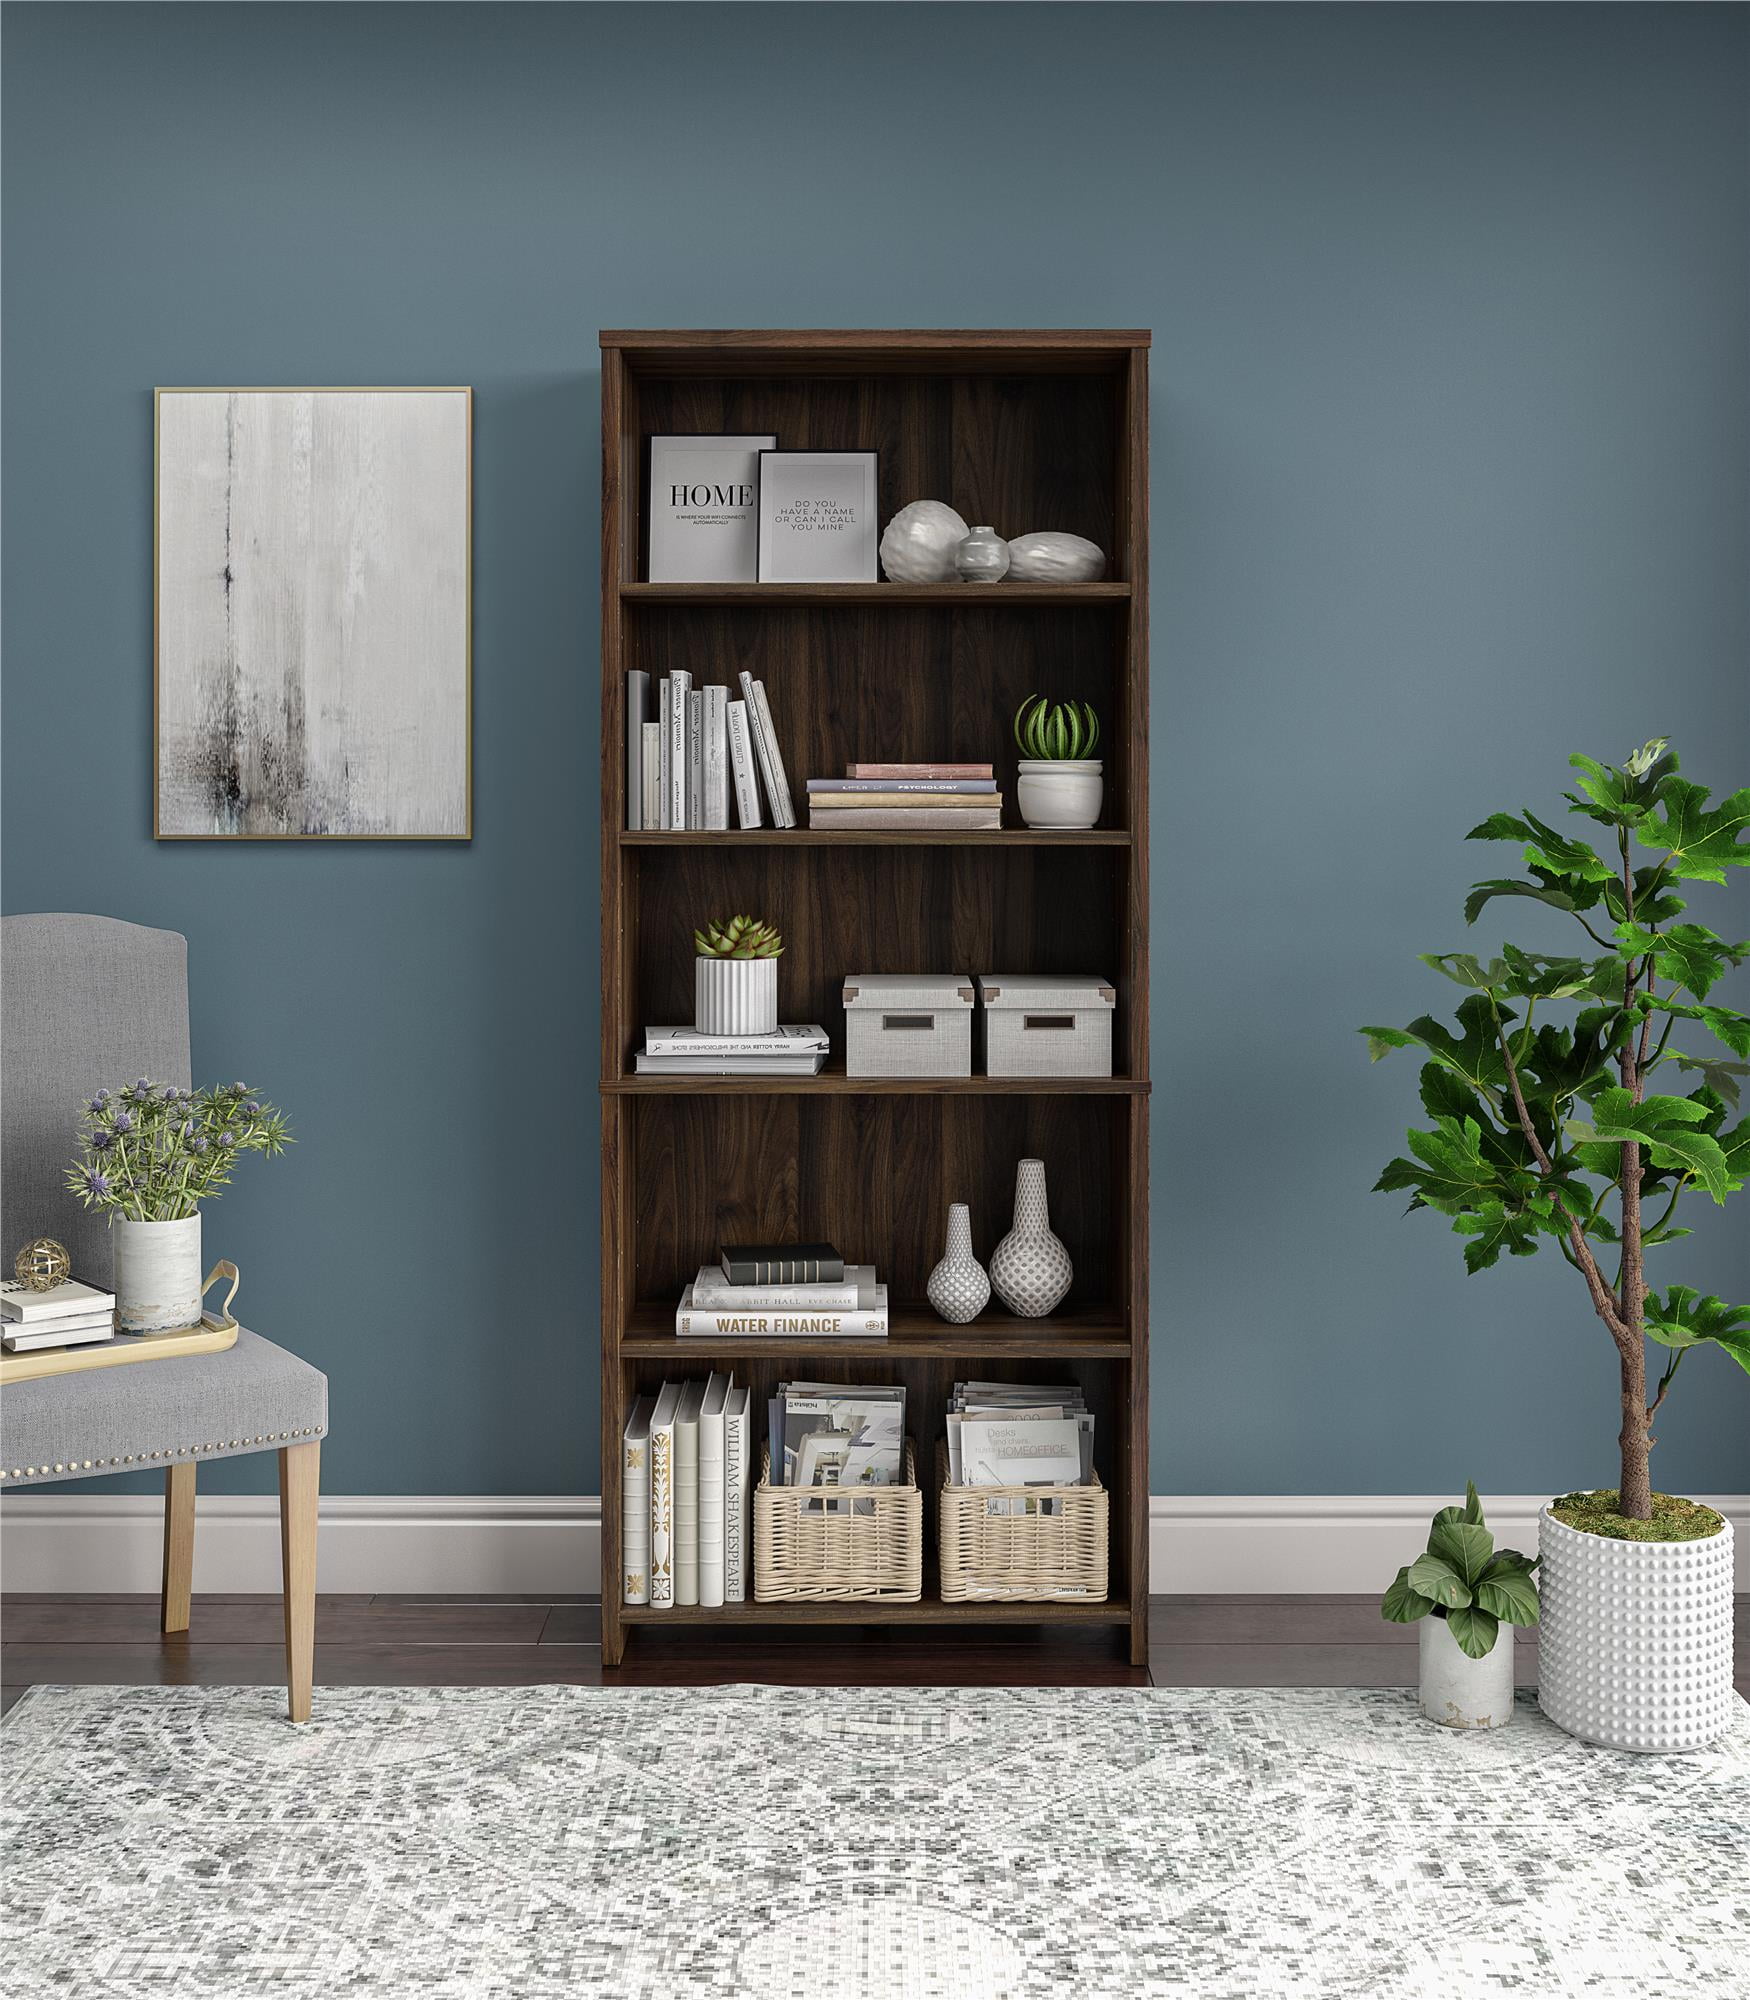  Five Shelf Bookcase for Small Space